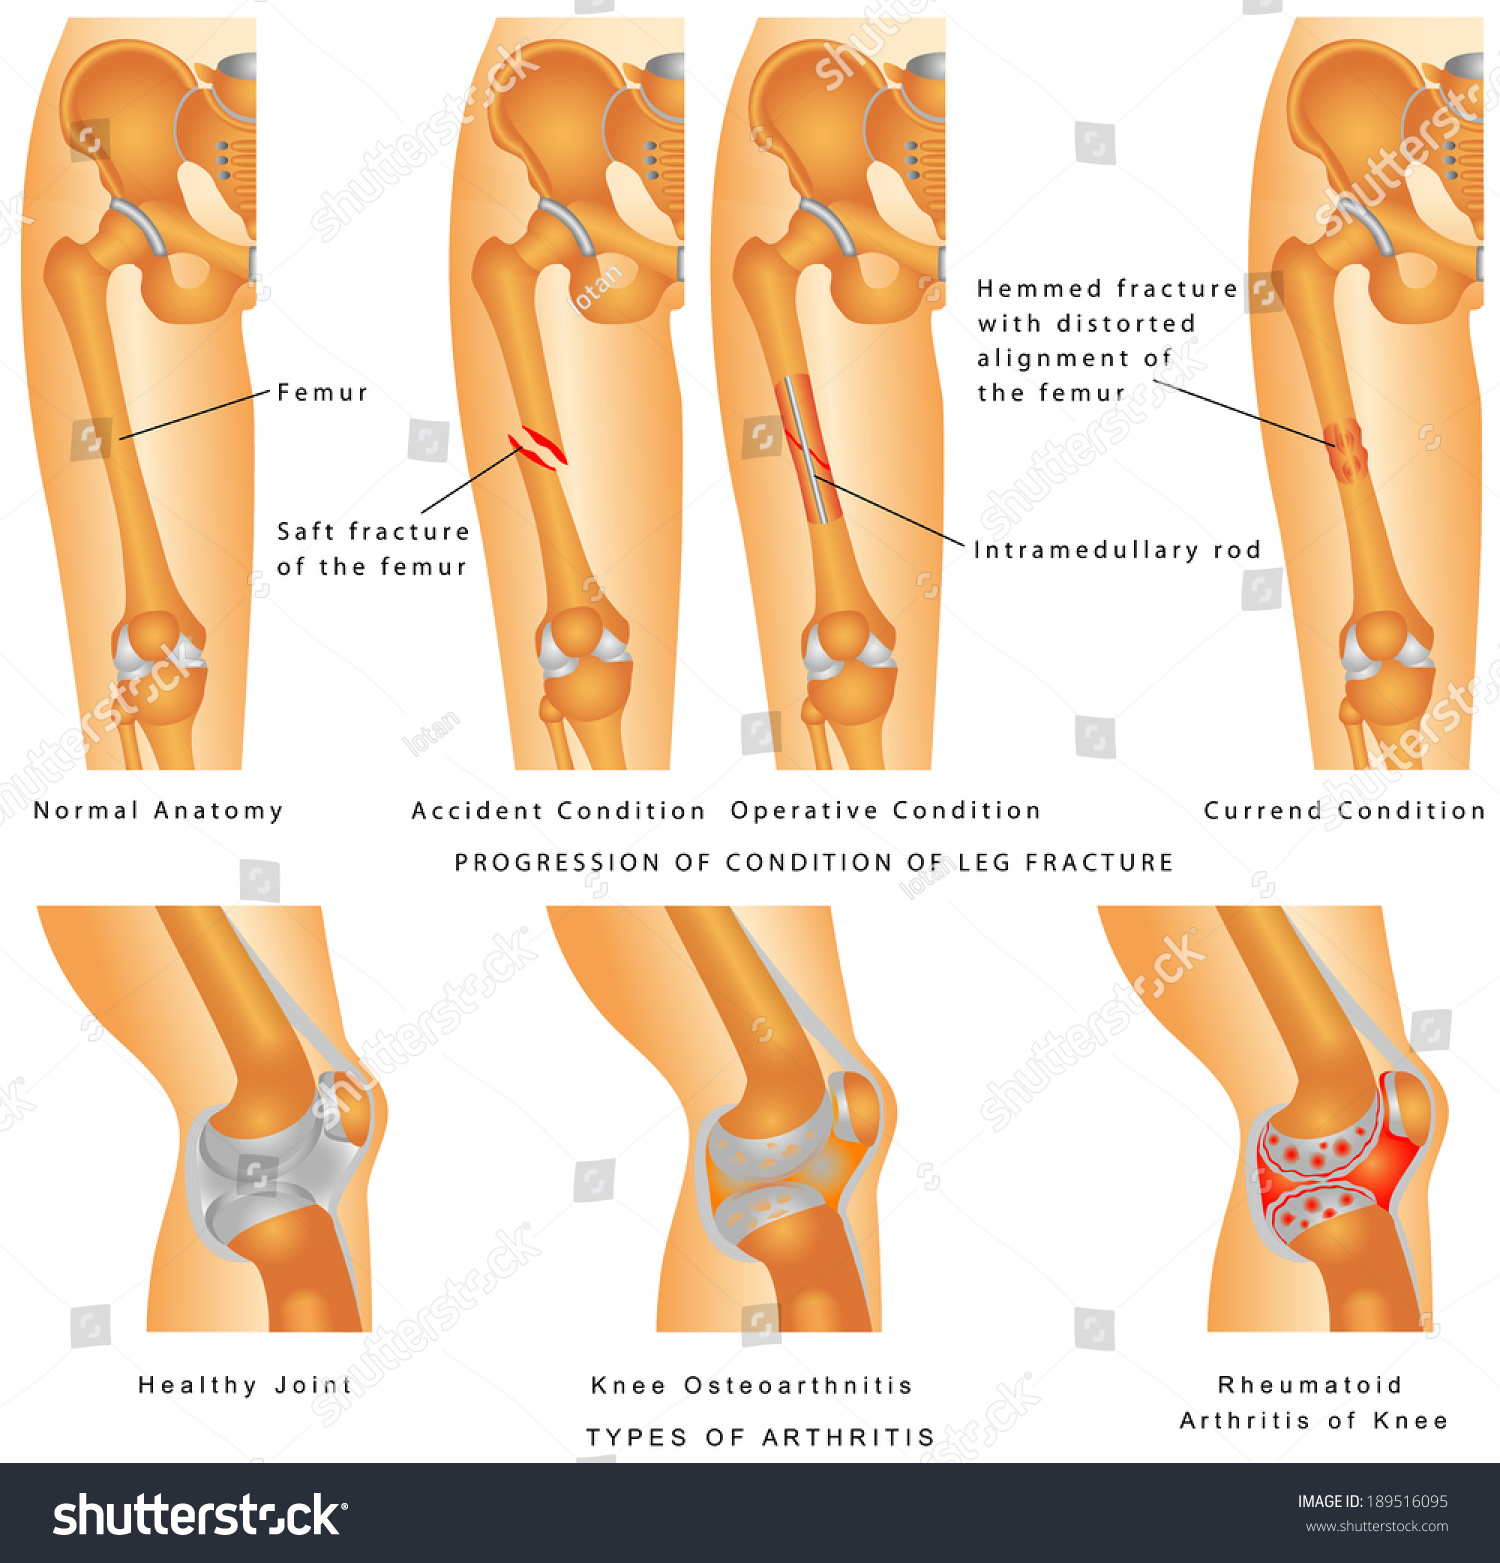 SVG of Fractures of Femur. Hemmed fracture with distorted alignment of the femur. Fixation of Femur Fracture with Placement of Intramedullary Rod. Types of Arthritis - Osteoarthritis, Rheumatoid Arthritis svg